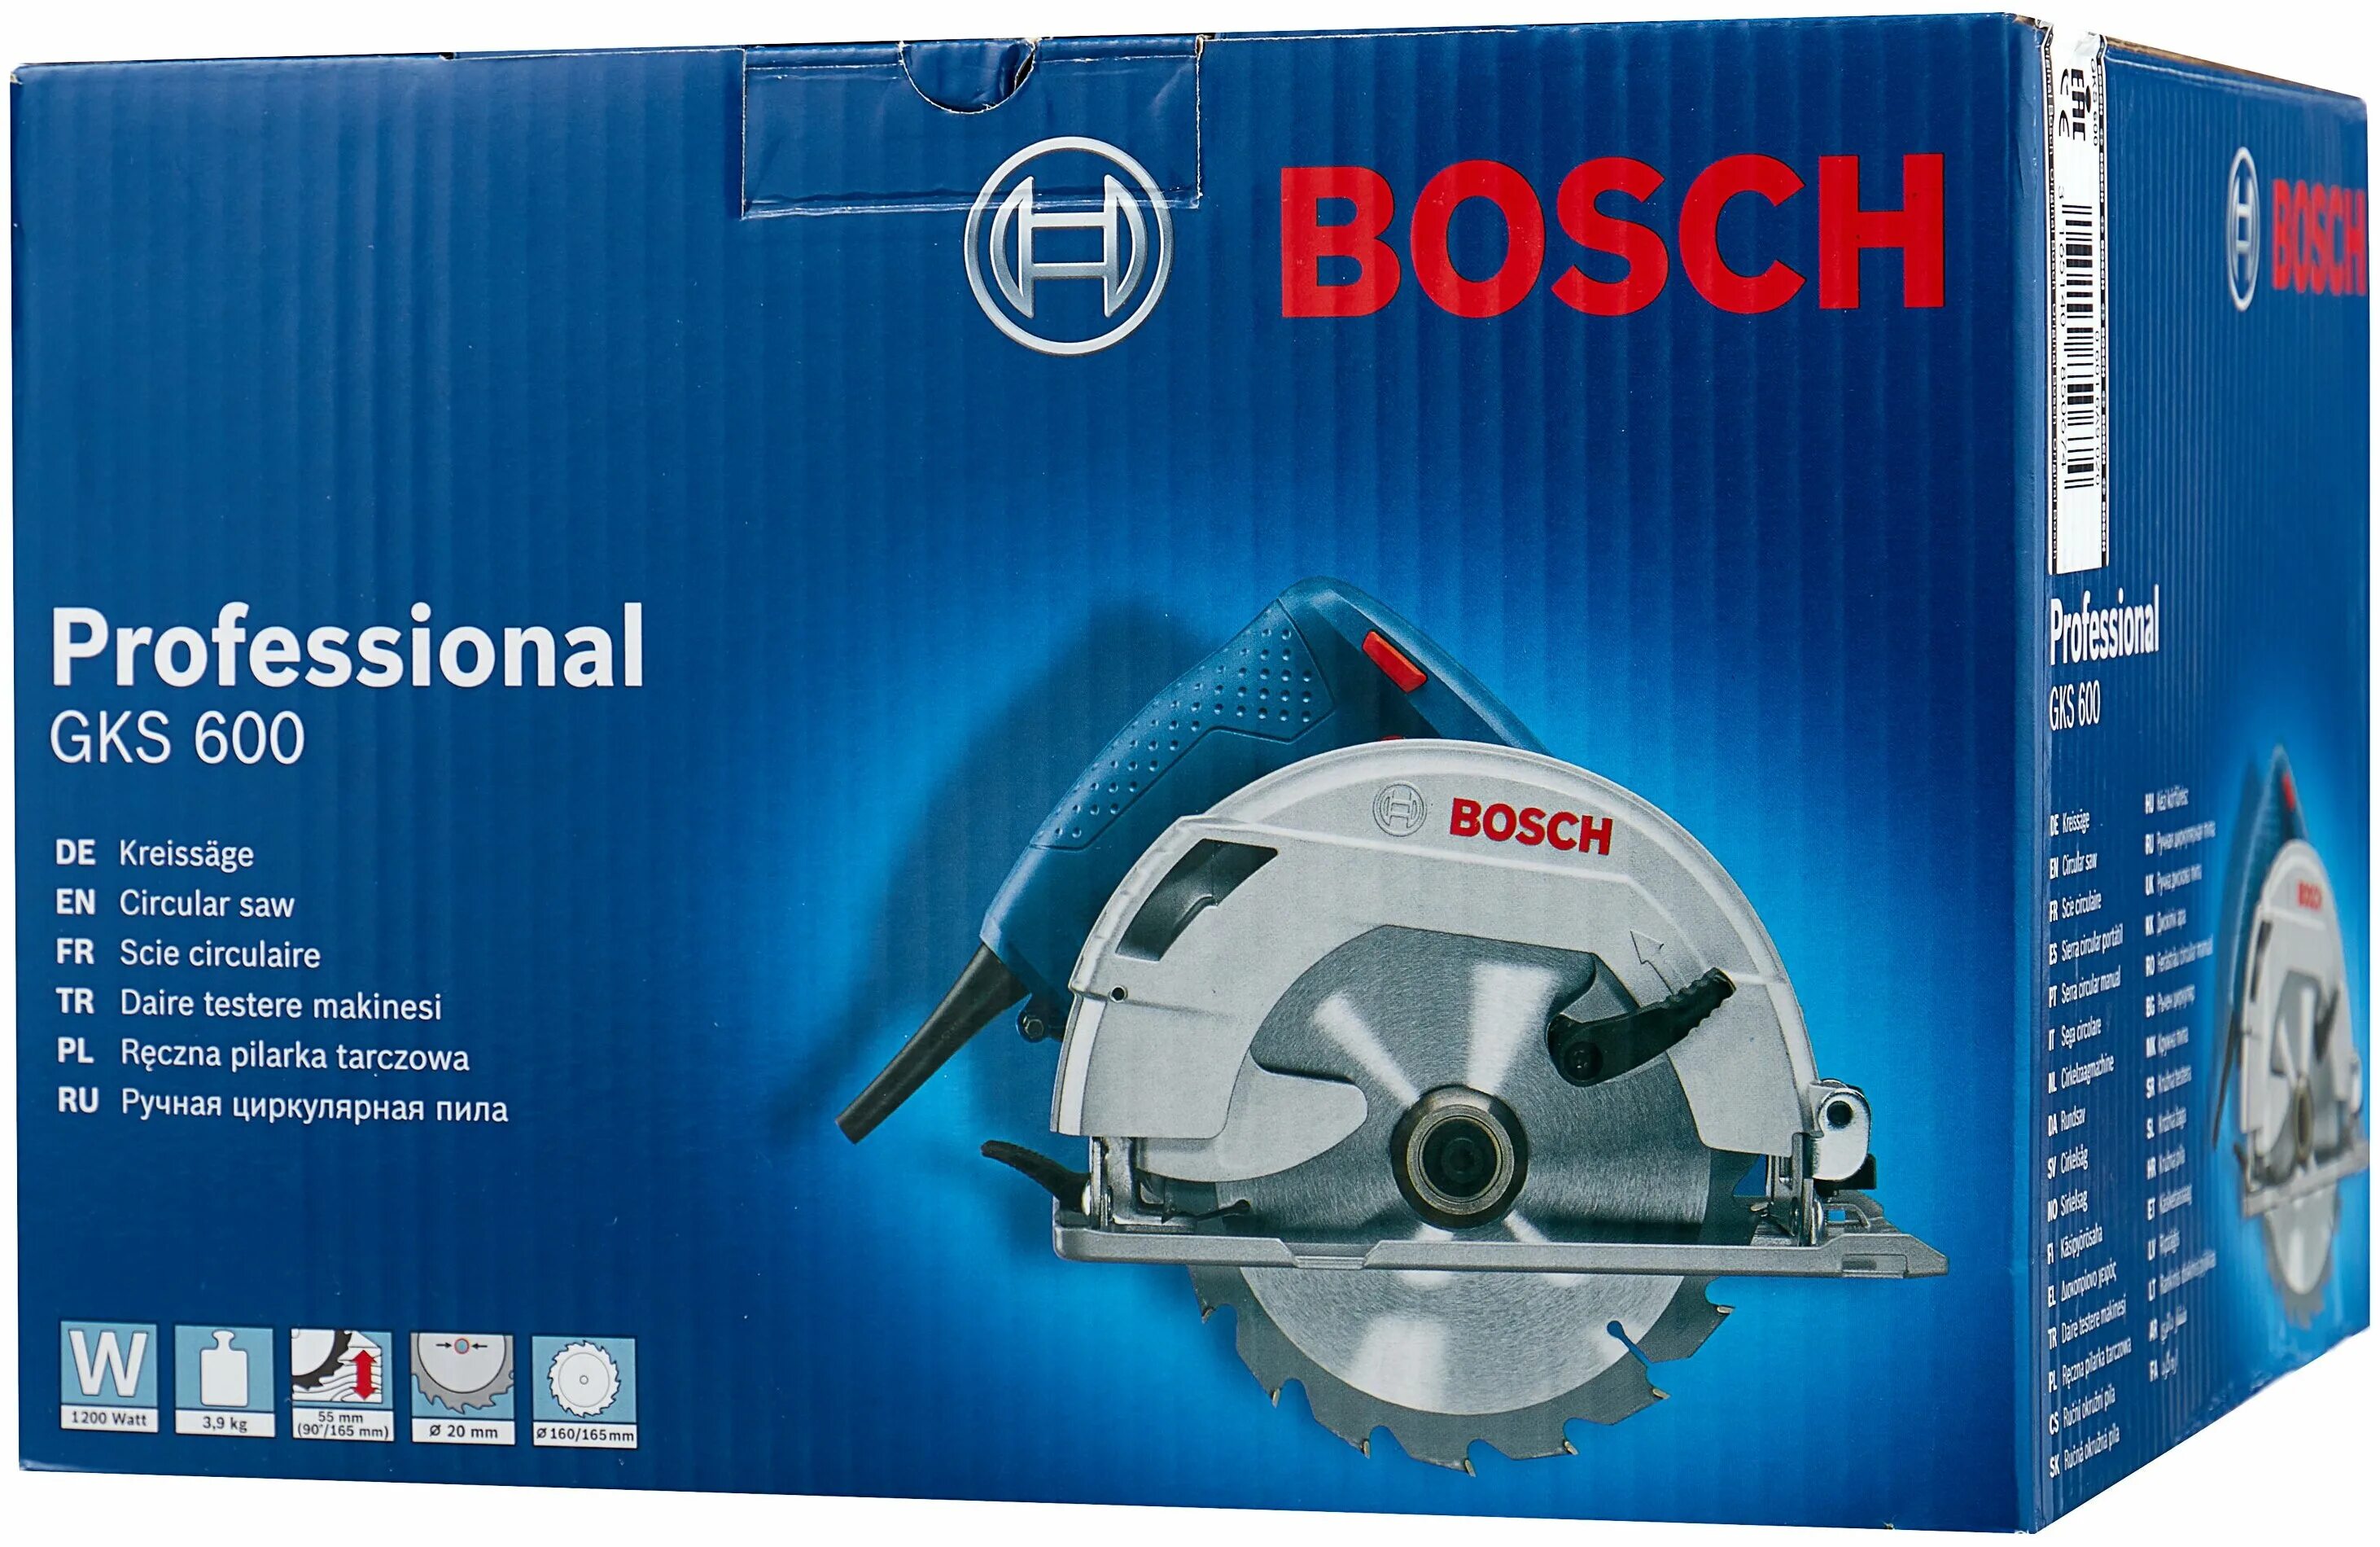 Bosch GKS 600. Bosch GKS 600 1200 Вт. Дисковая пила Bosch GKS 600, 1200 Вт. Циркулярная пила Bosch GKS 600 1200w.